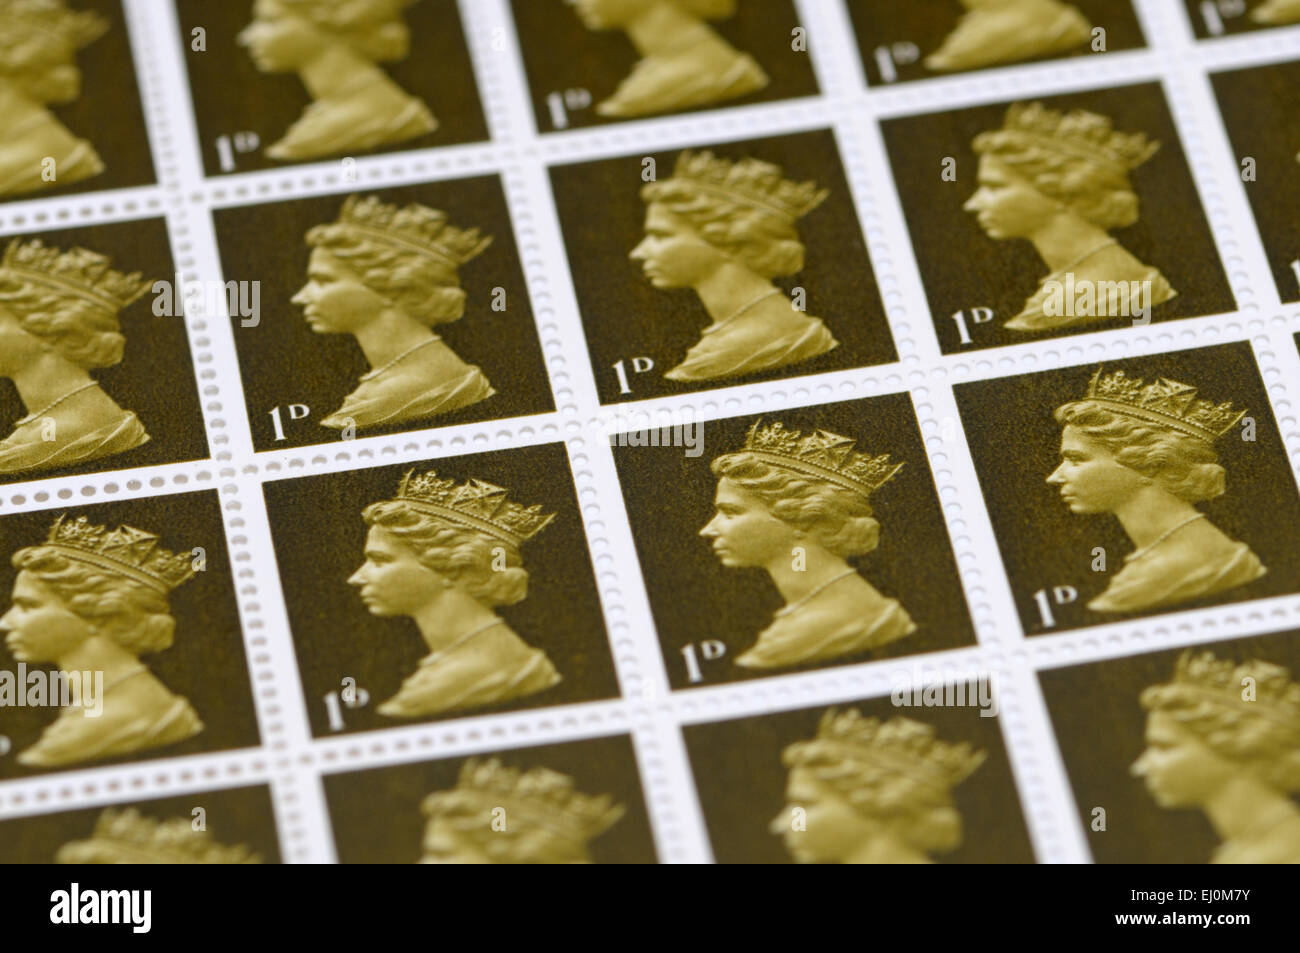 British pre-decimal definitive 1d stamps Stock Photo